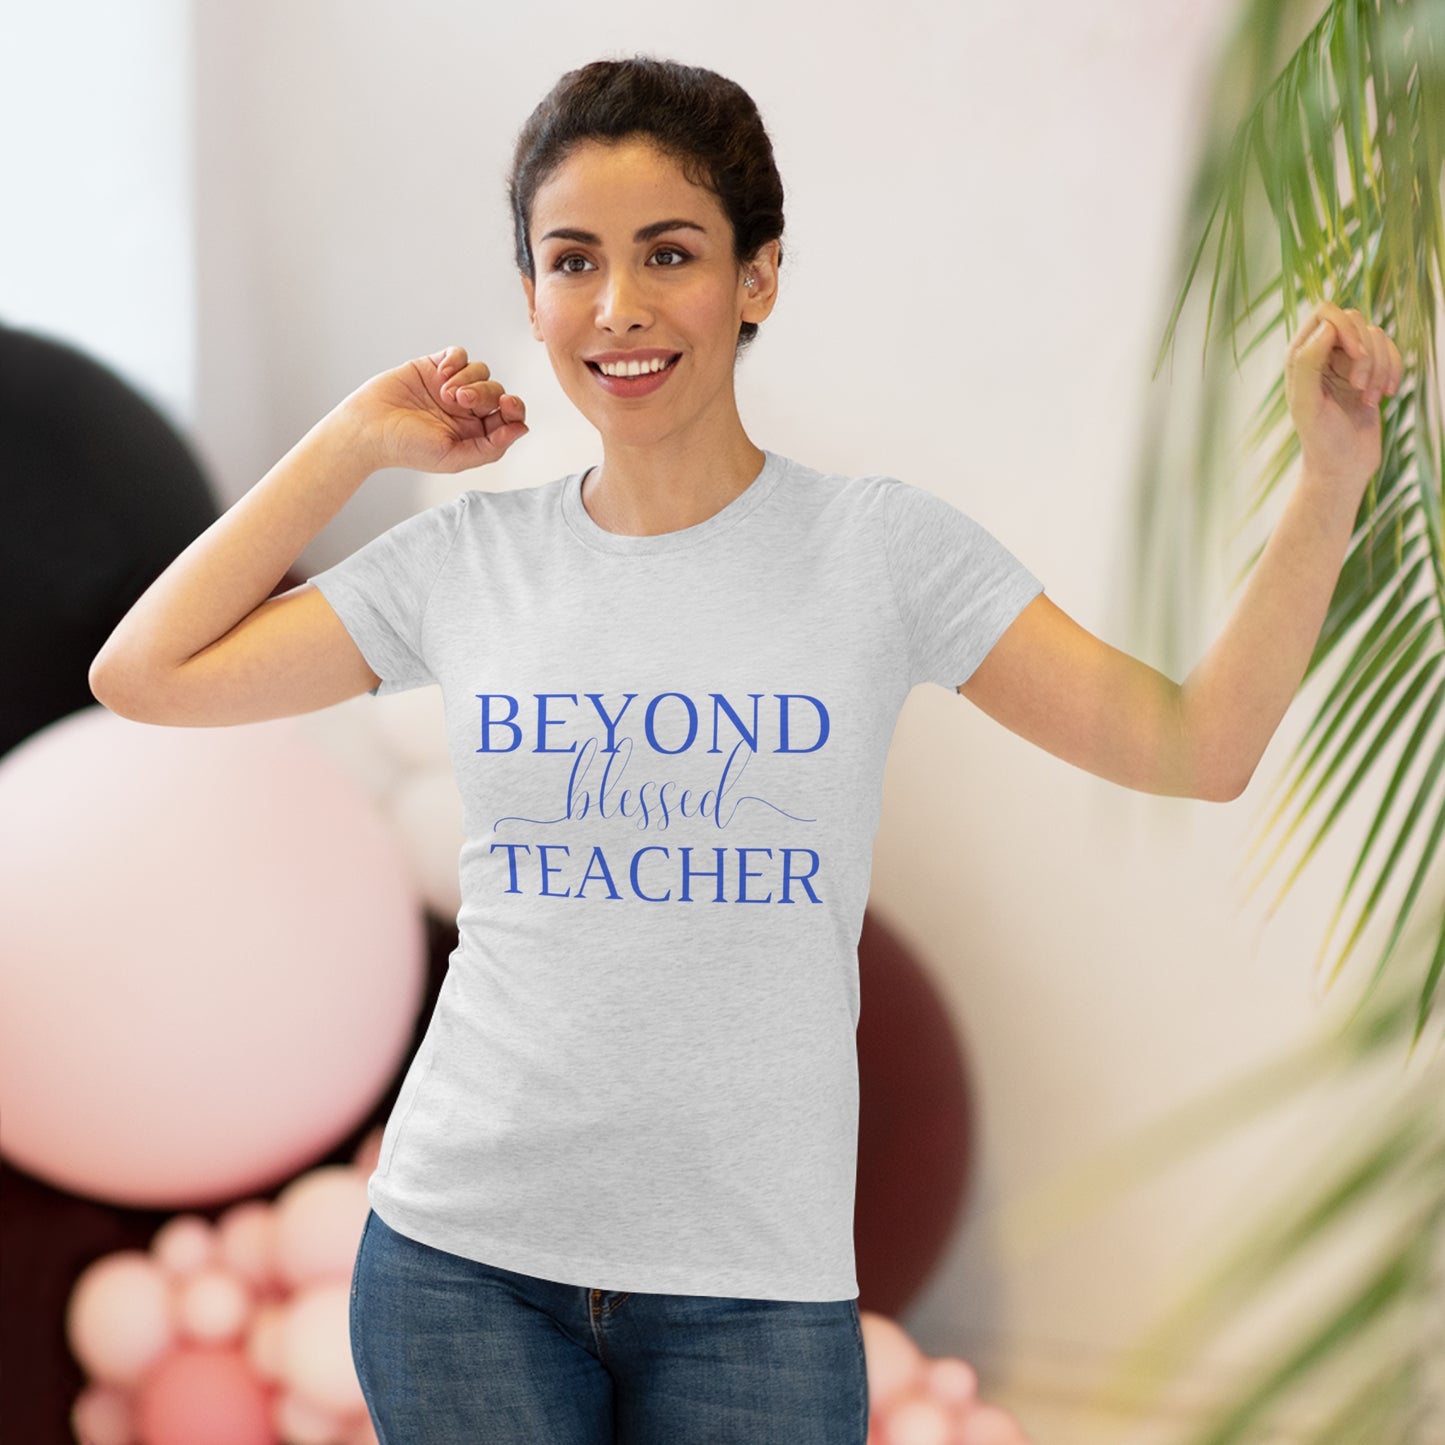 Beyond Blessed Teacher - Women's Triblend Tee - Royal Blue